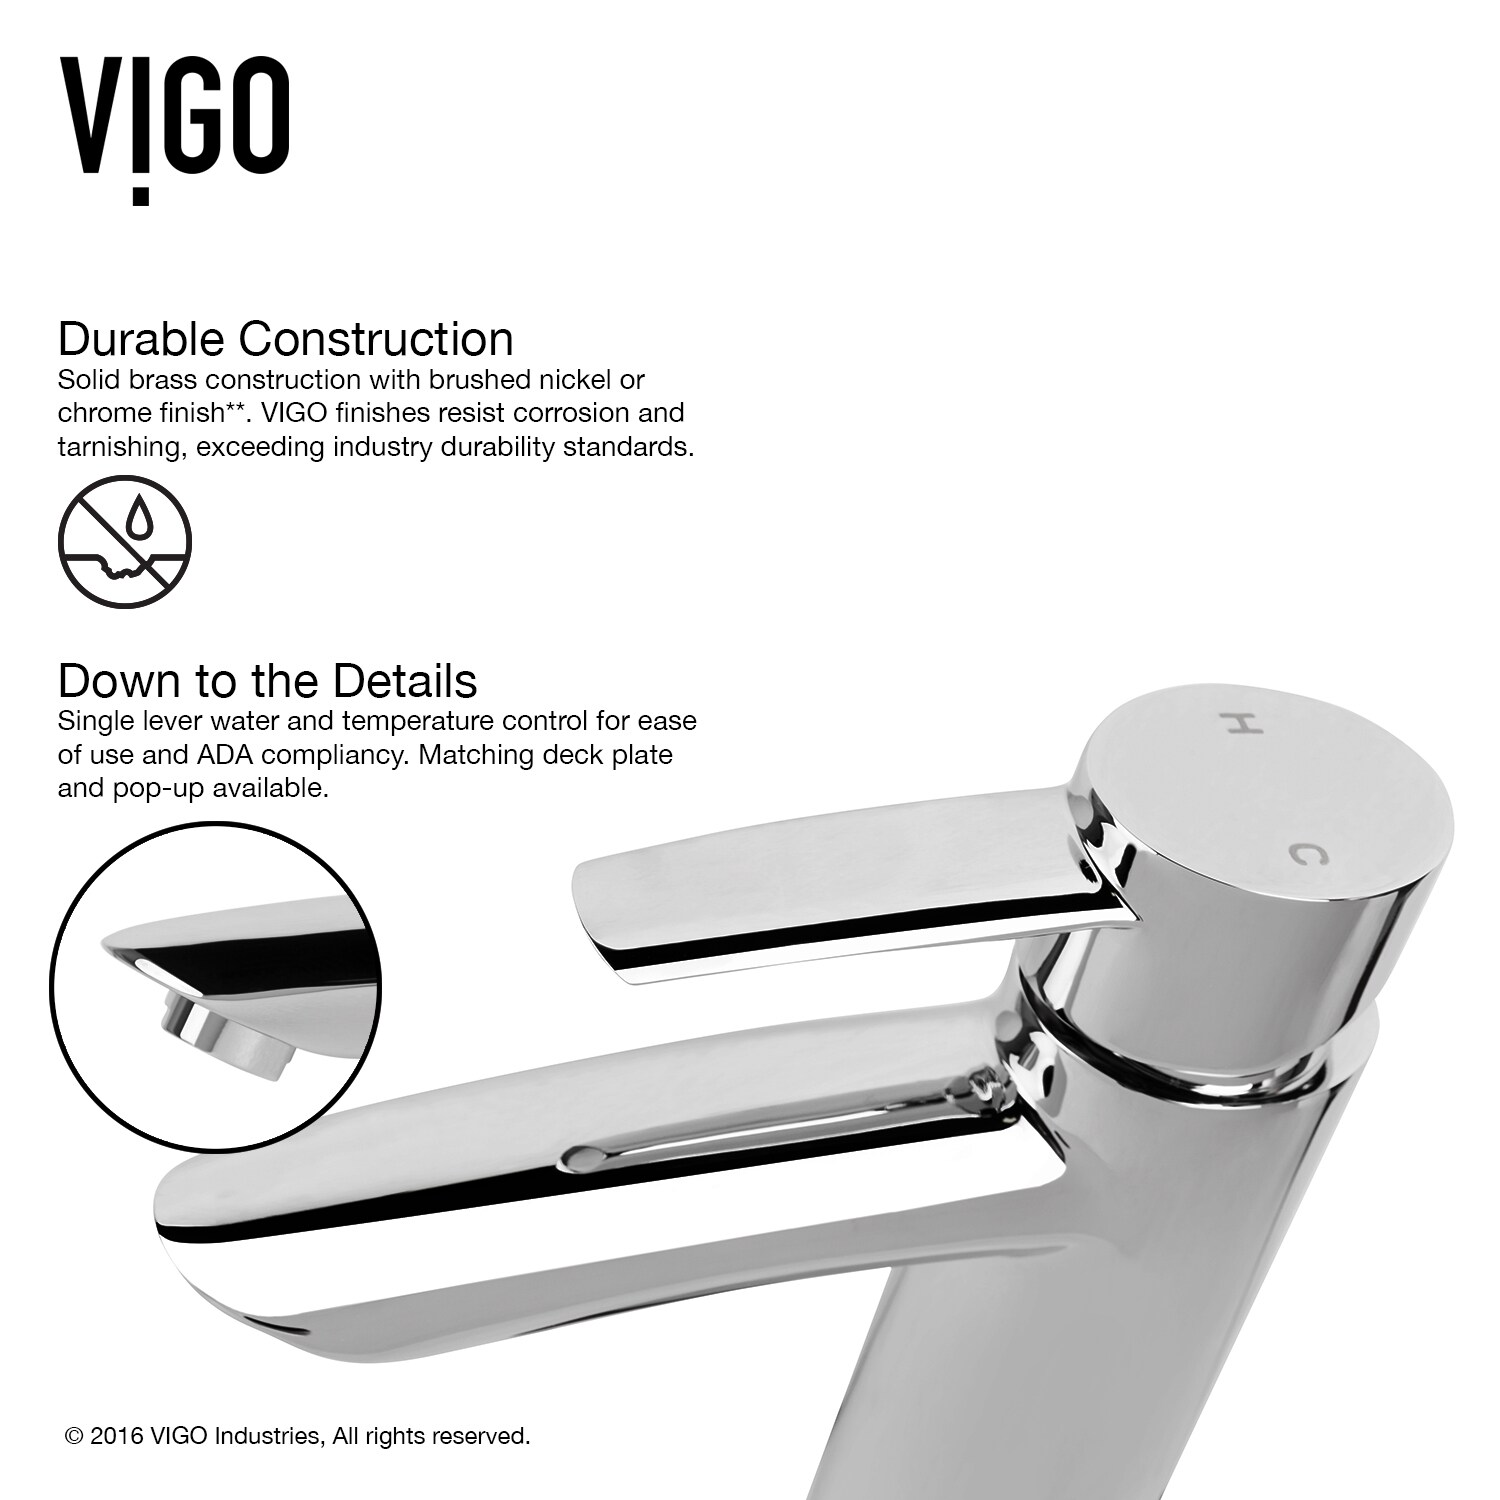 VIGO Bova Chrome 1-handle Single Hole WaterSense Low-arc Bathroom Sink Faucet